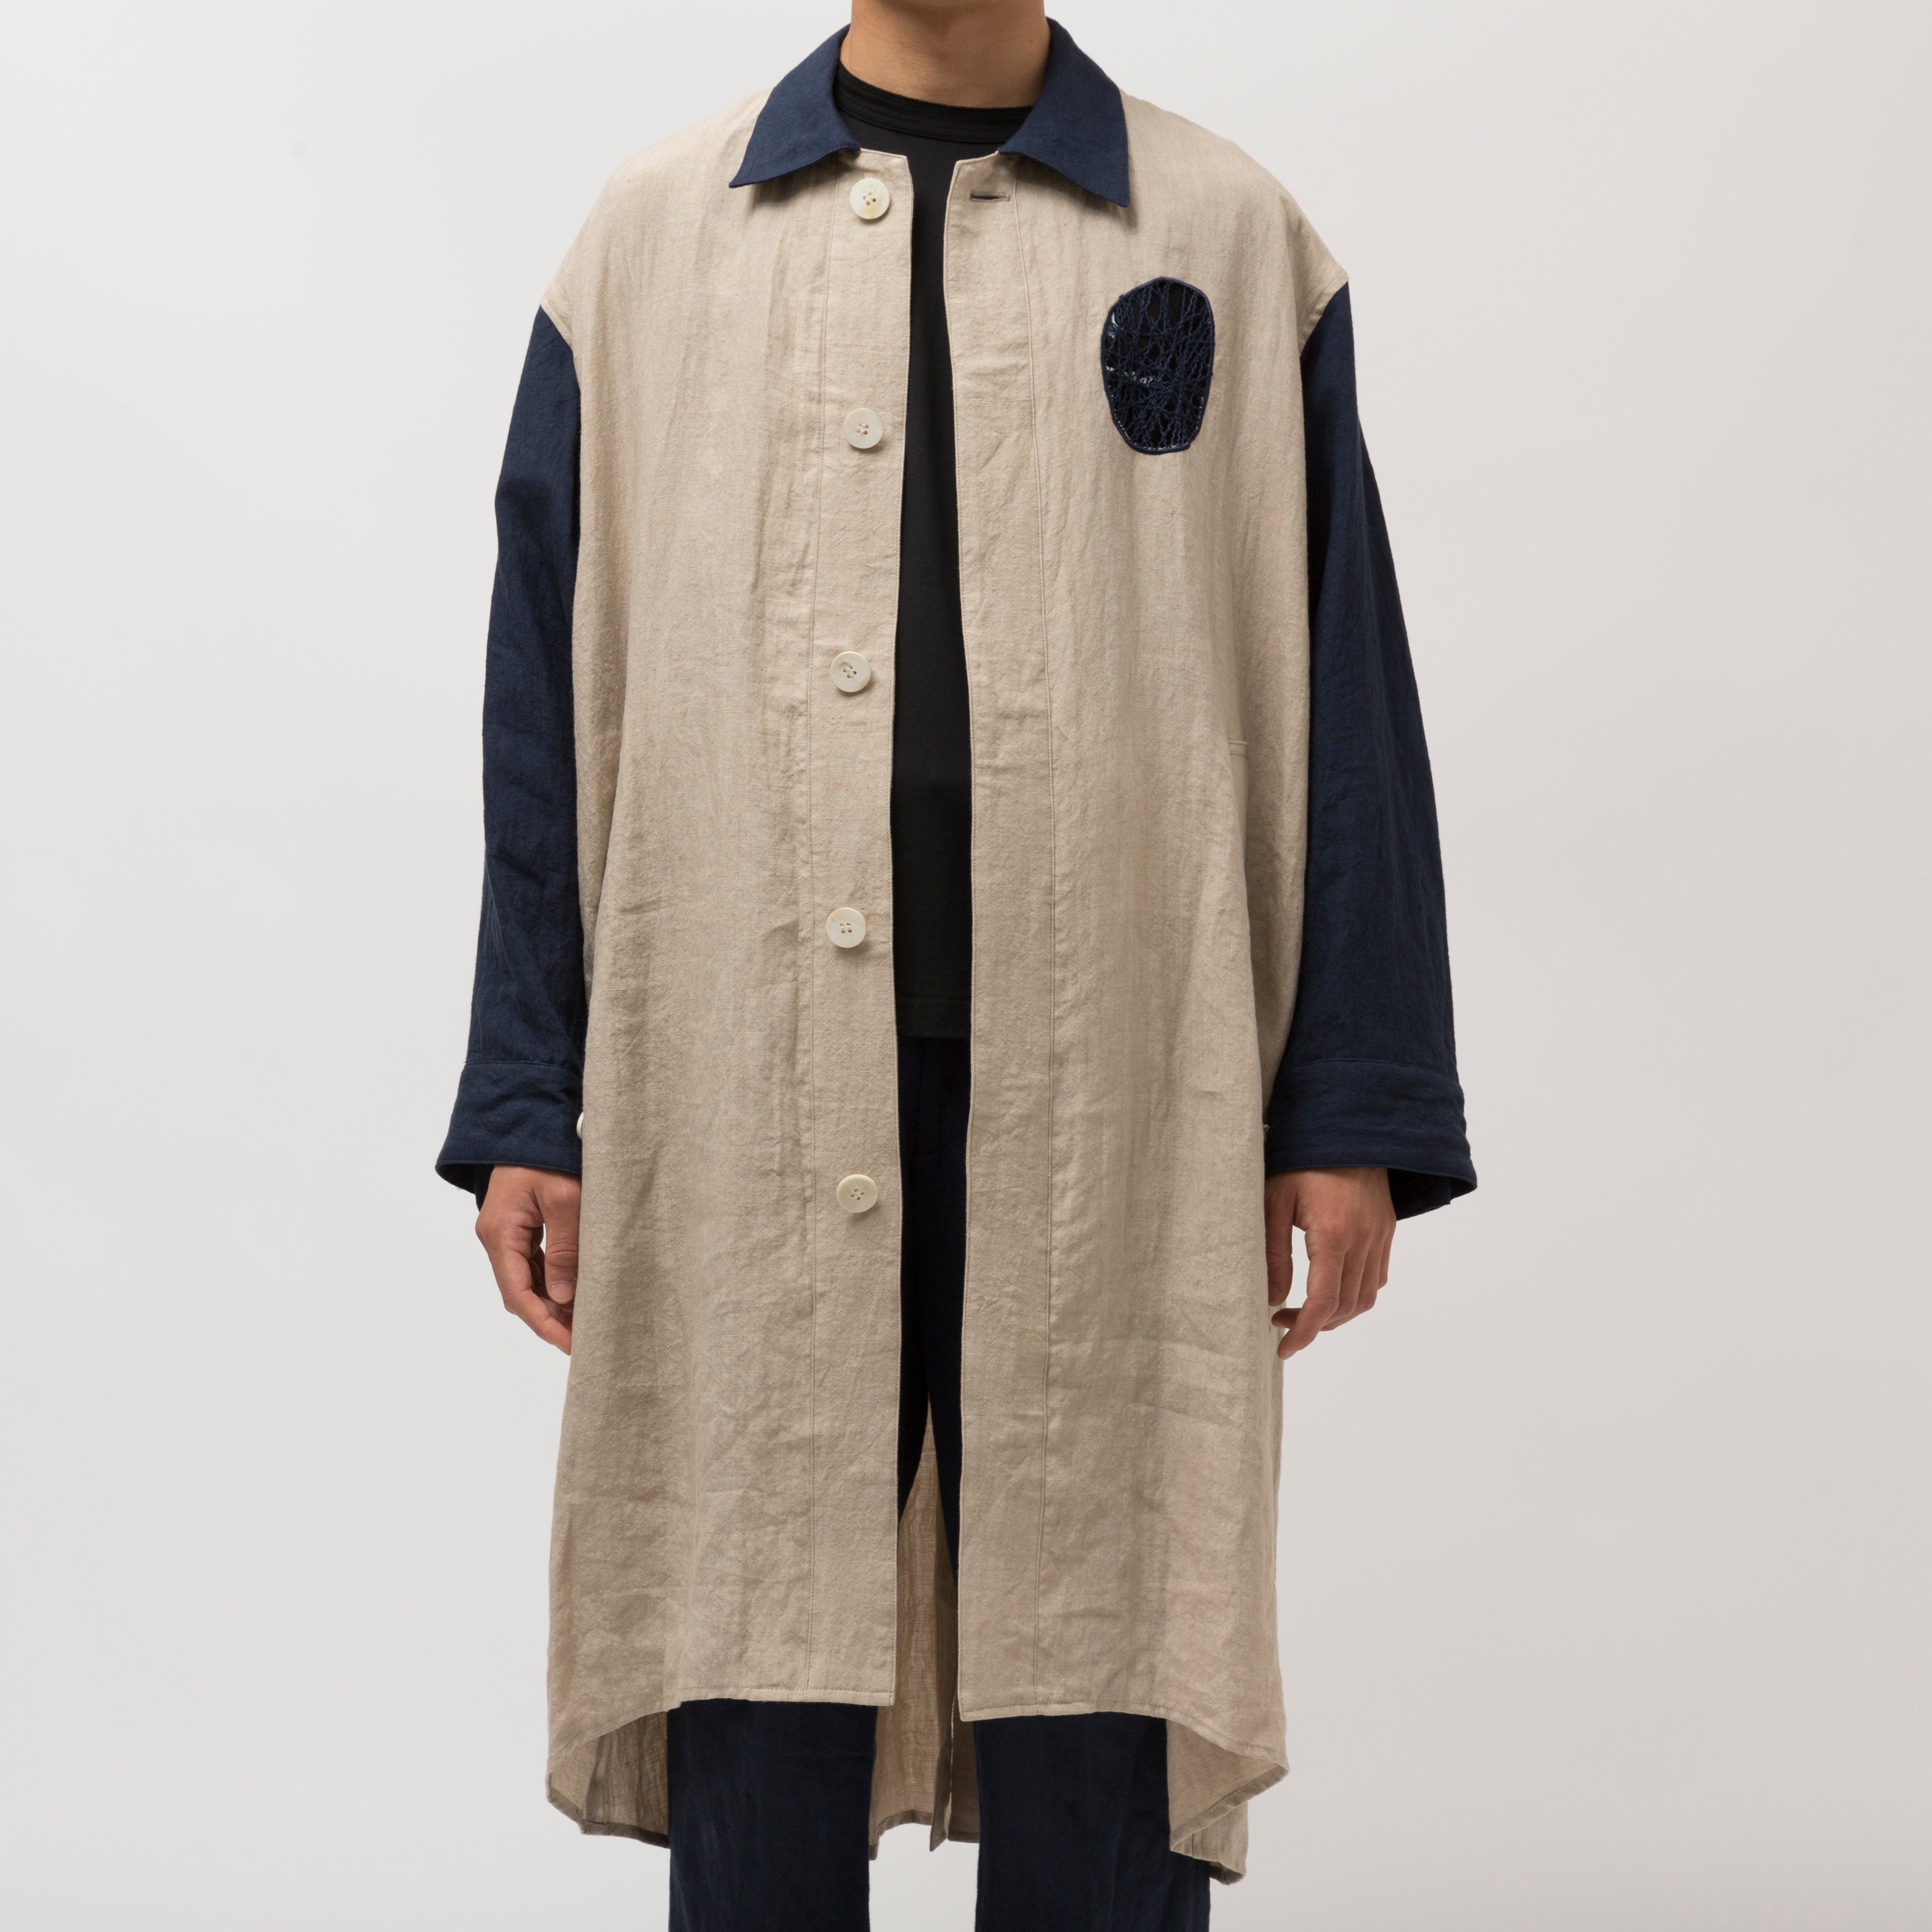 Muscari Linen Coat